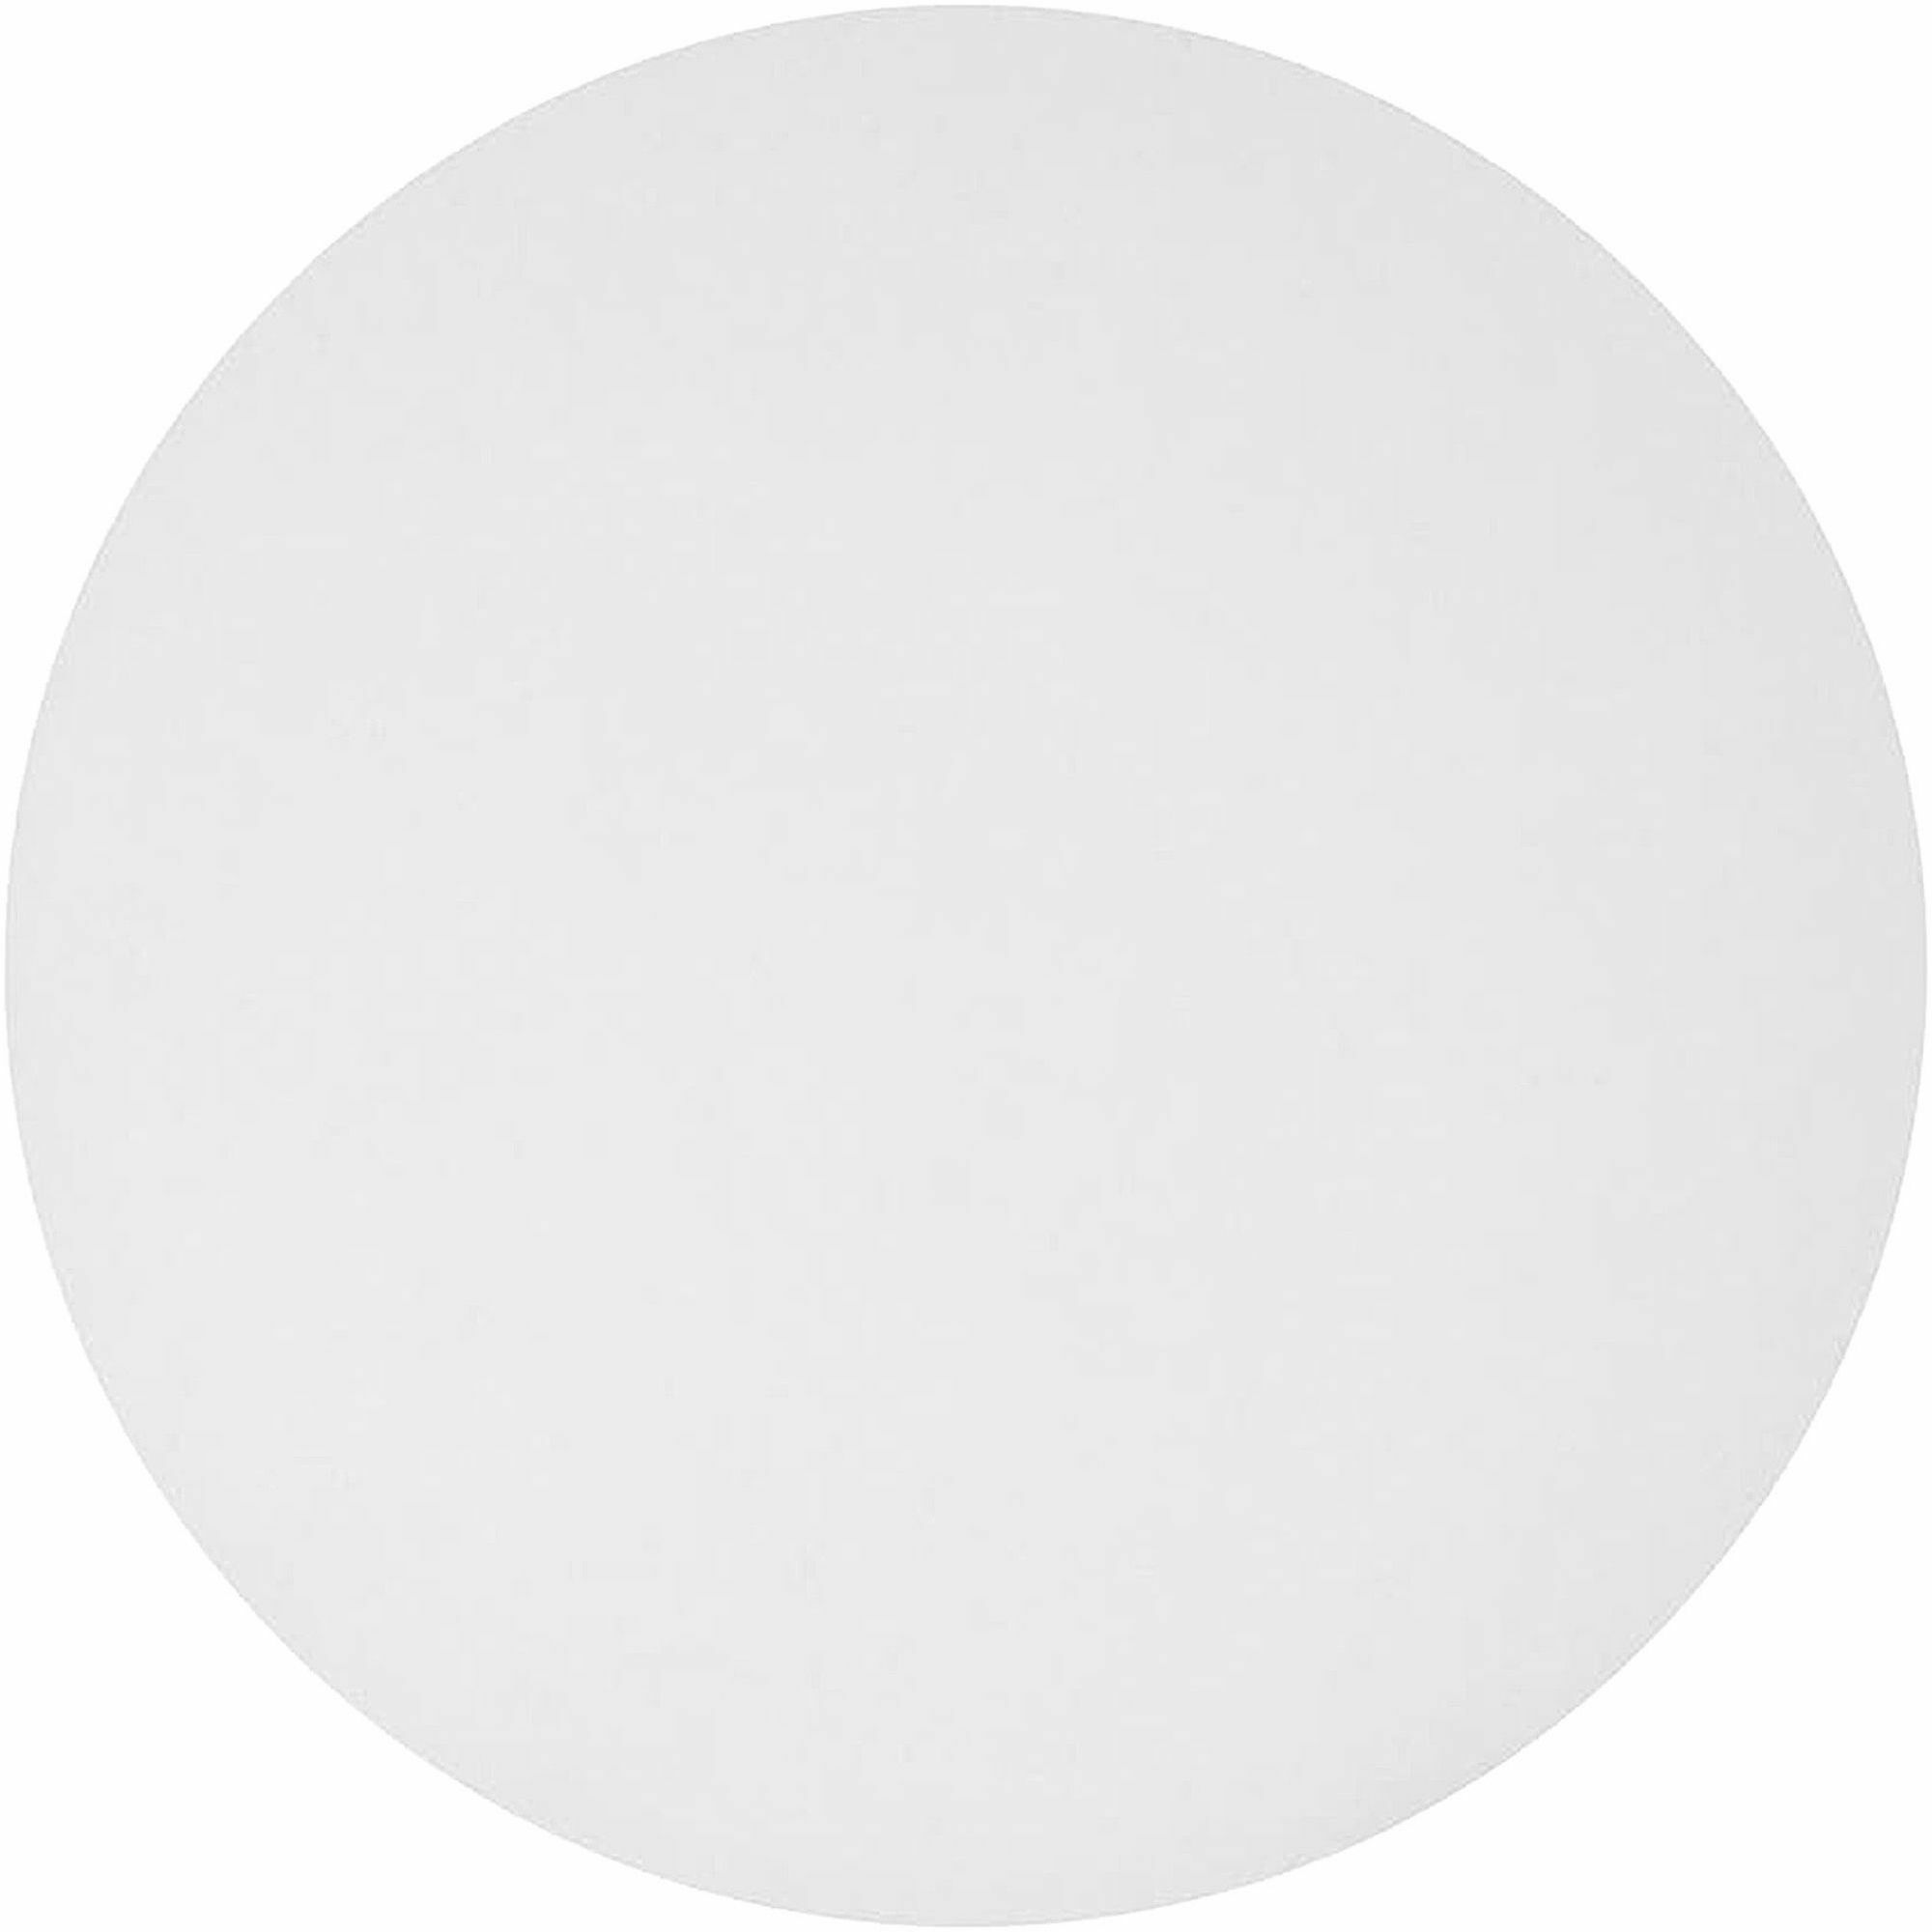 BluTable 7" Round Foil Pan Flat Board Lids - Round - 500 / Carton - White, Silver - 2